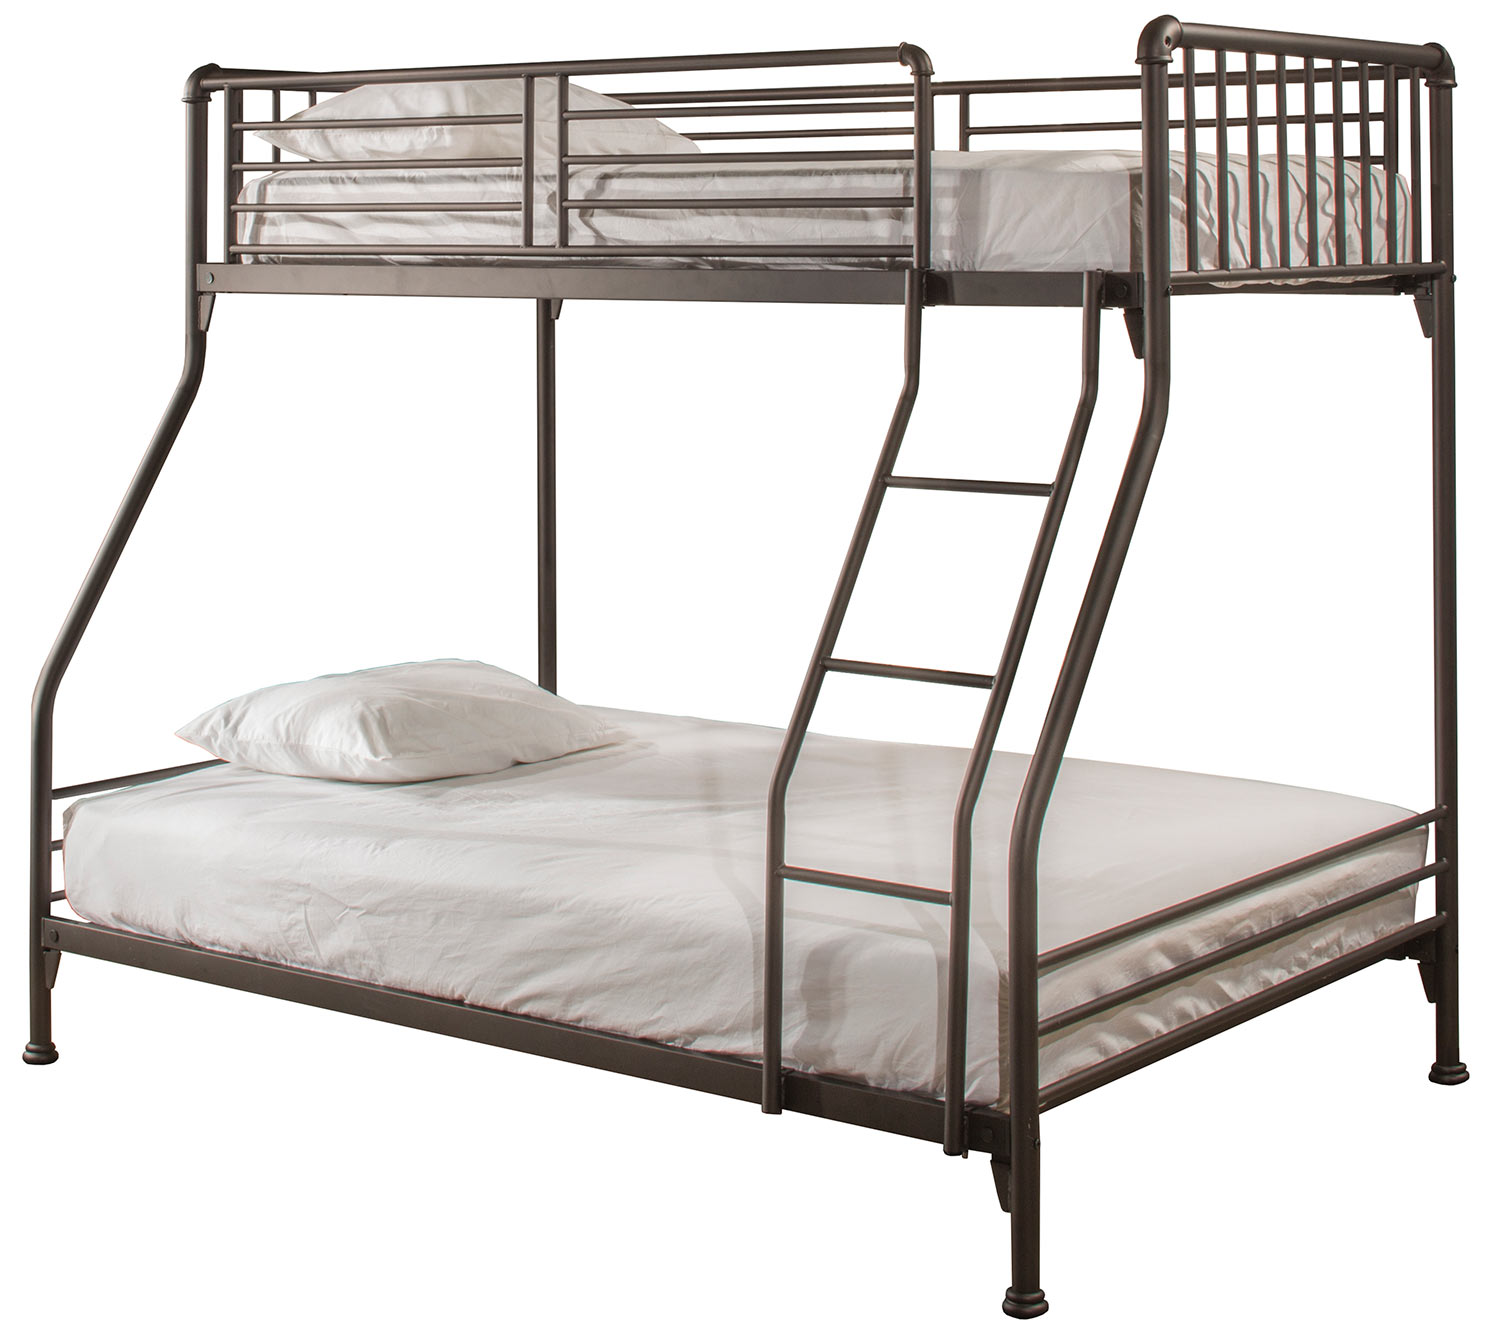 Hillsdale Brandi Twin/Full Size Bunk Bed - Oiled Bronze